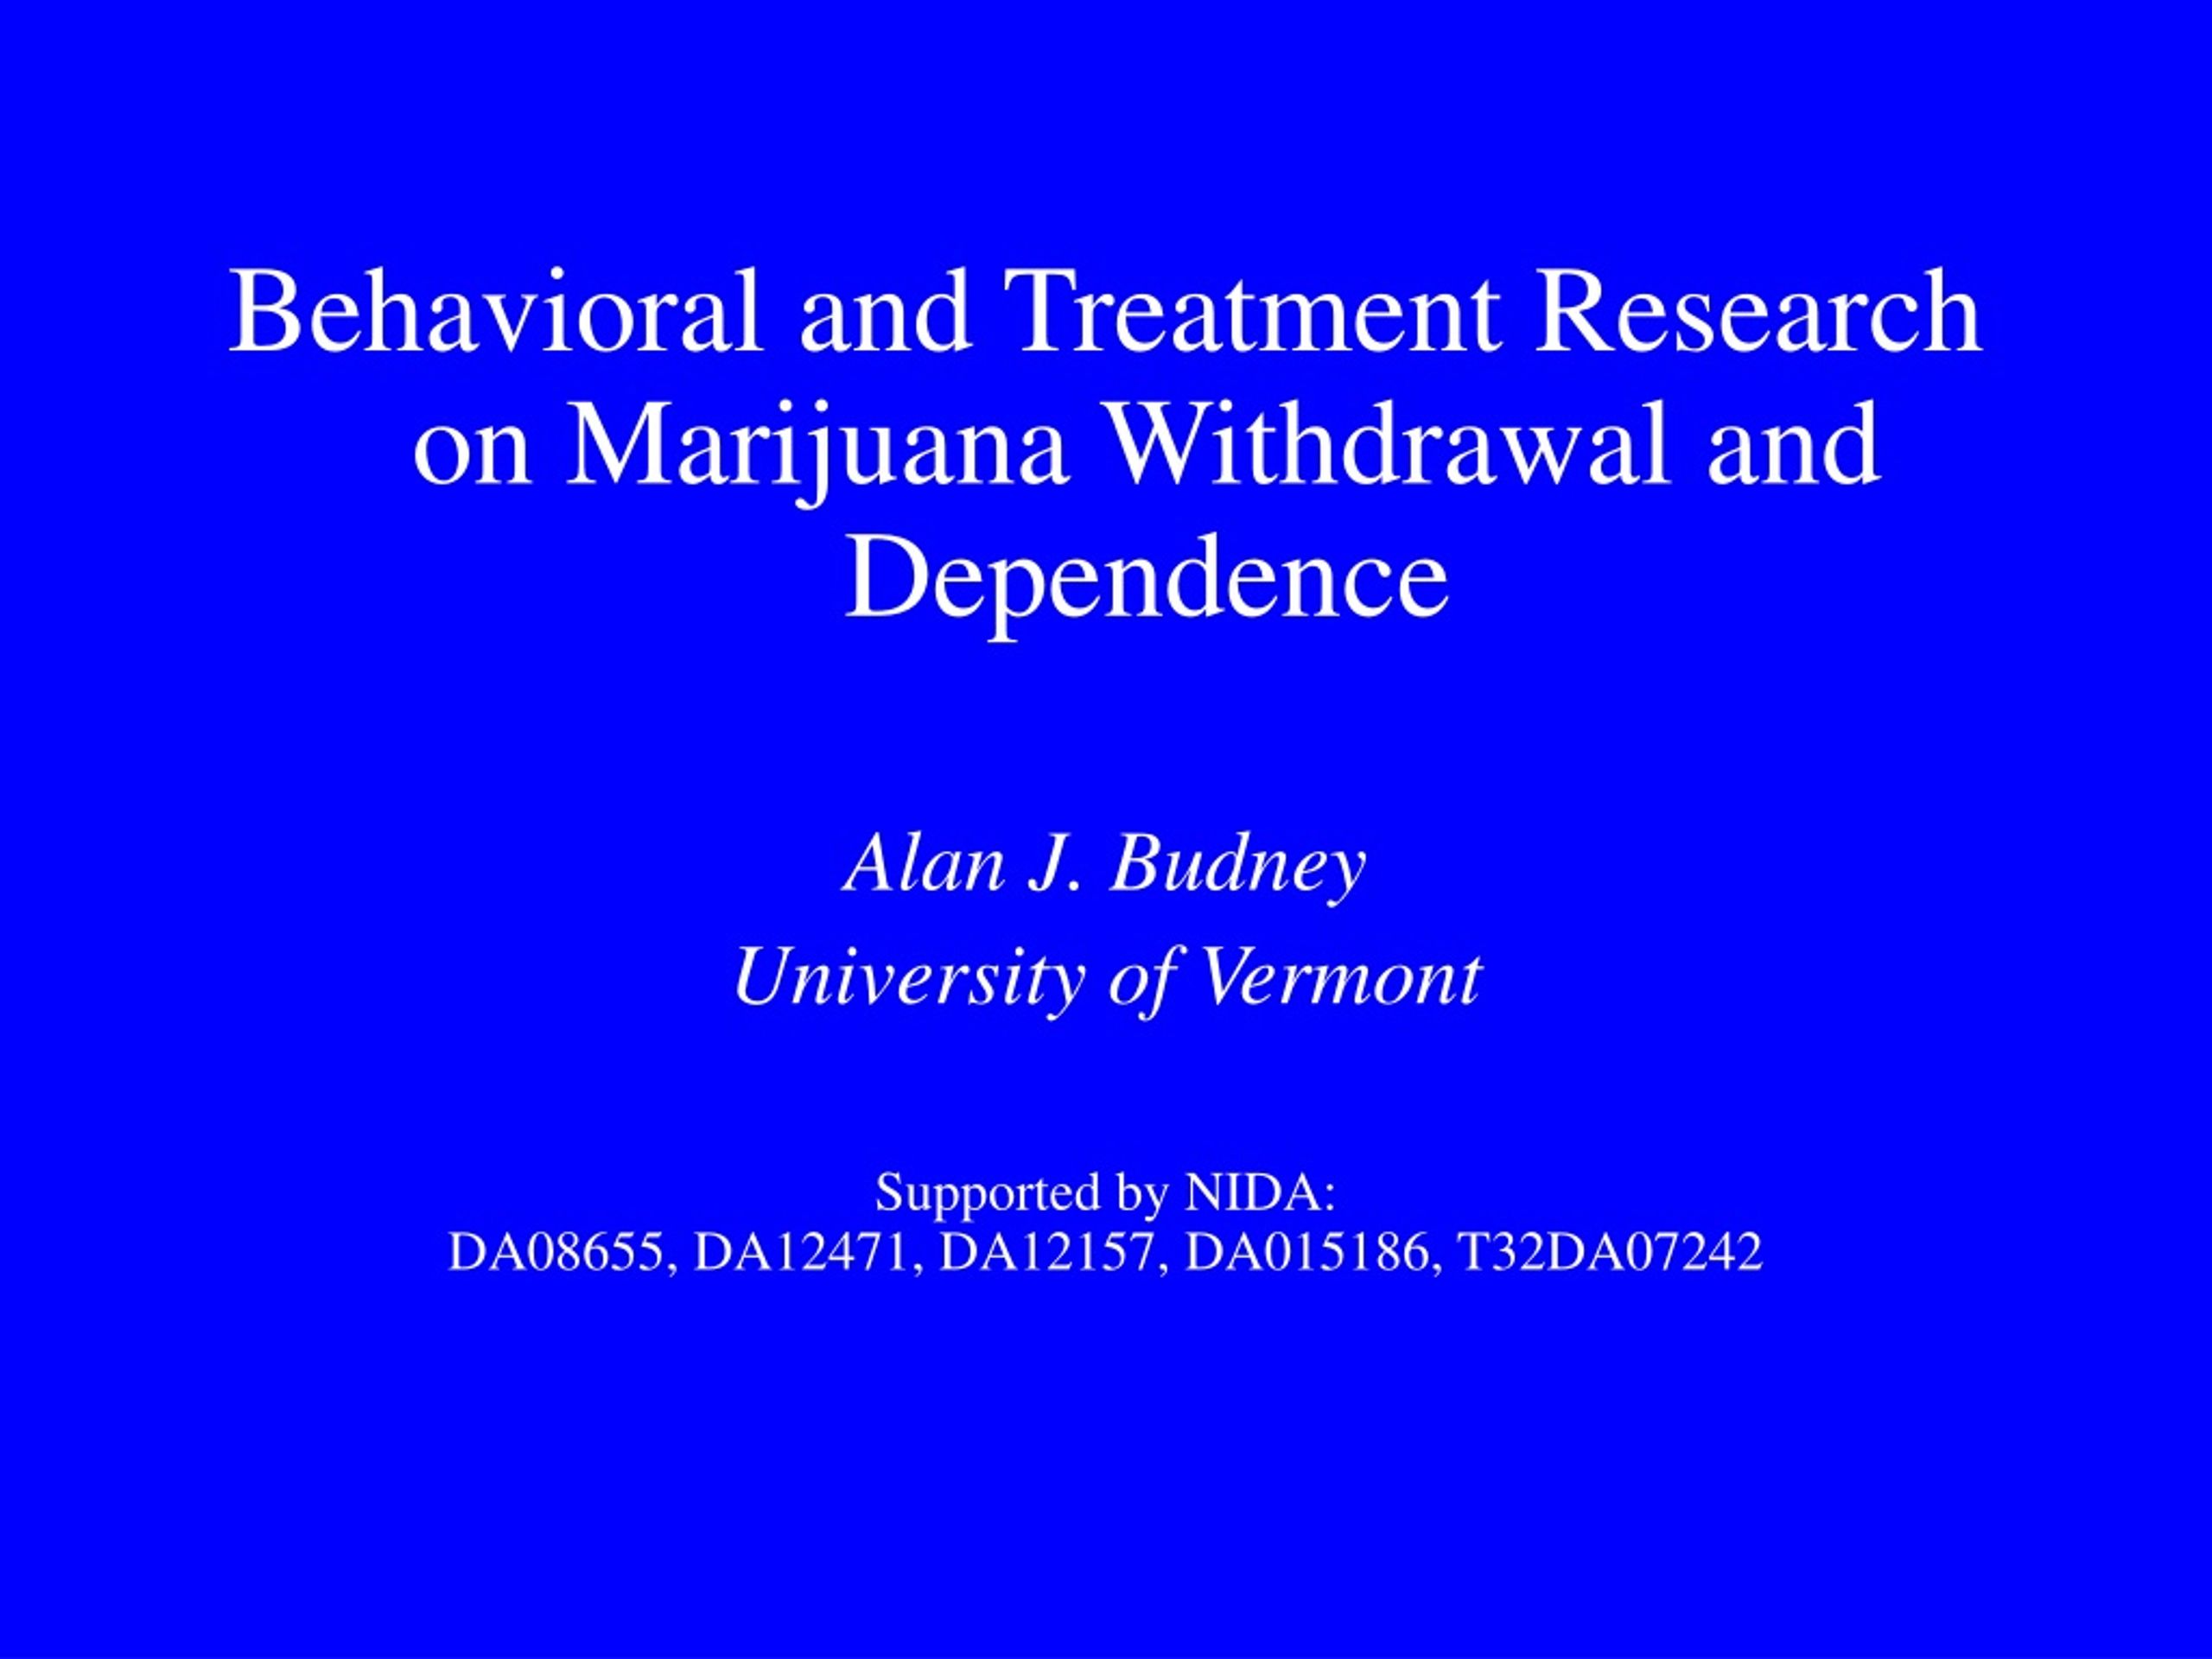 research on marijuana dependence